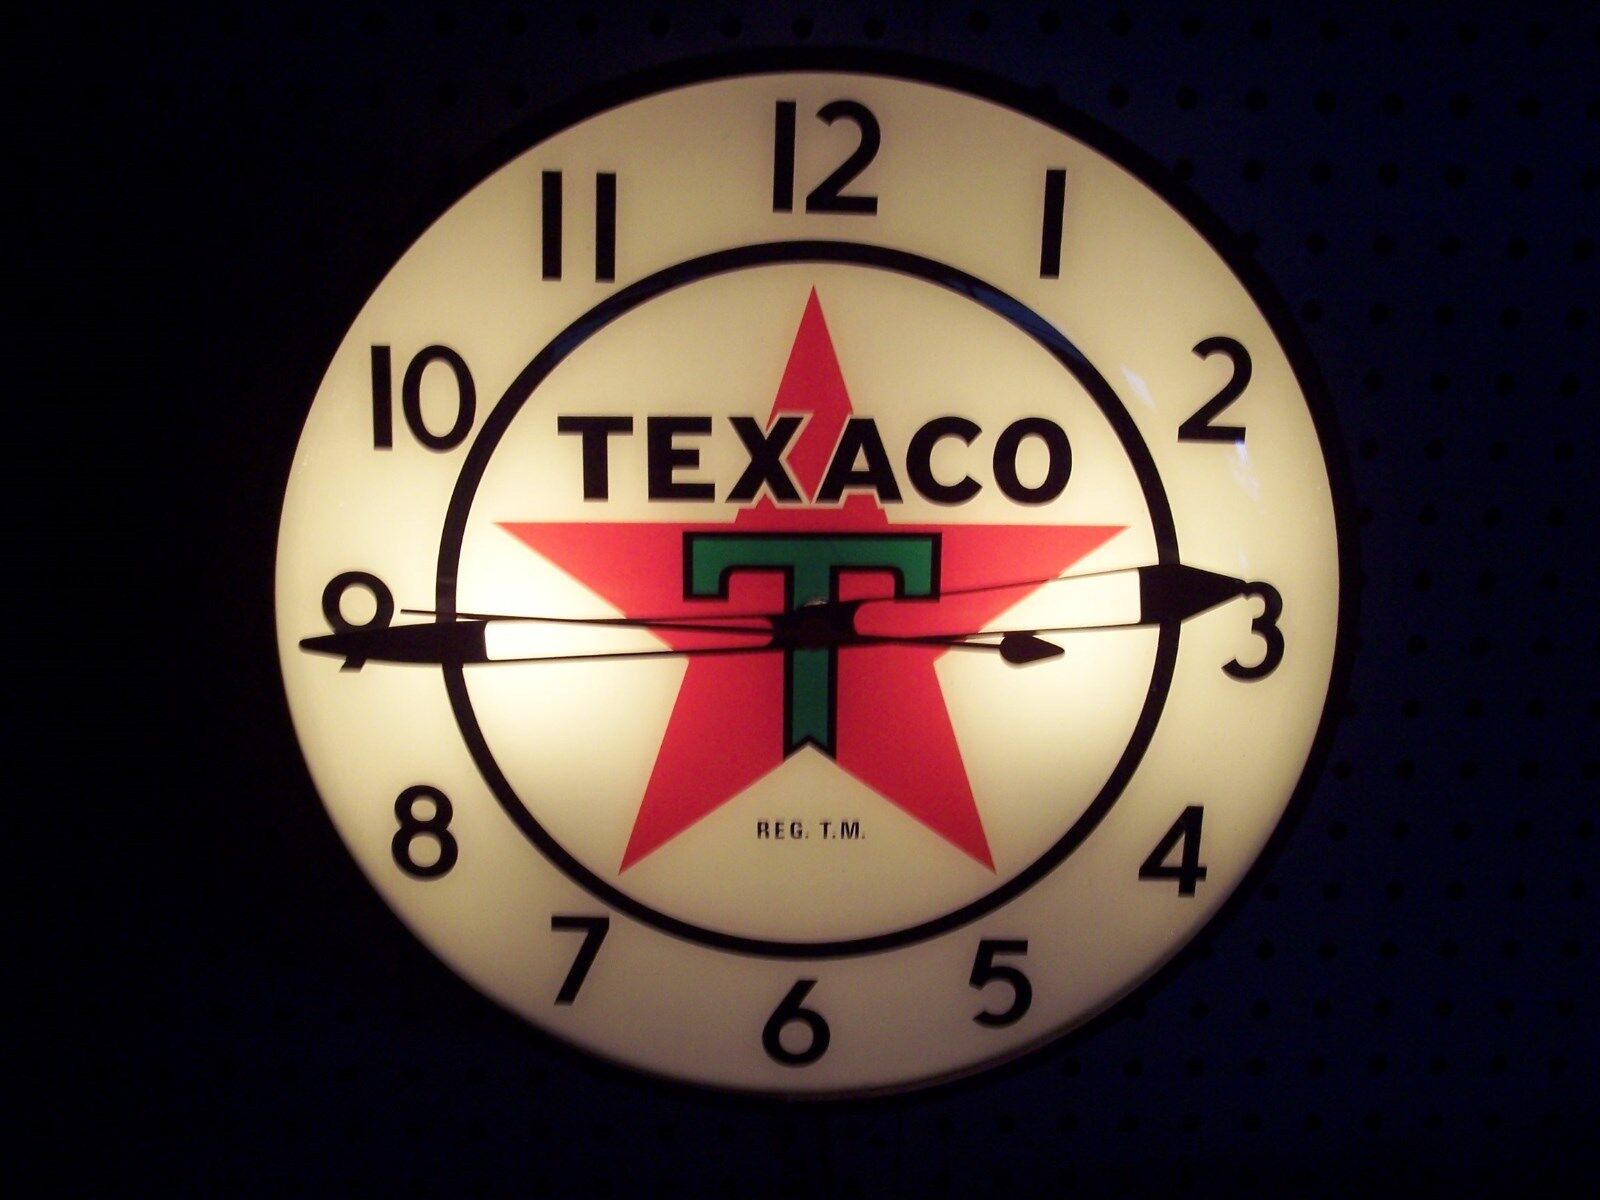 Texaco Pam Clock Lighted clock, display sign